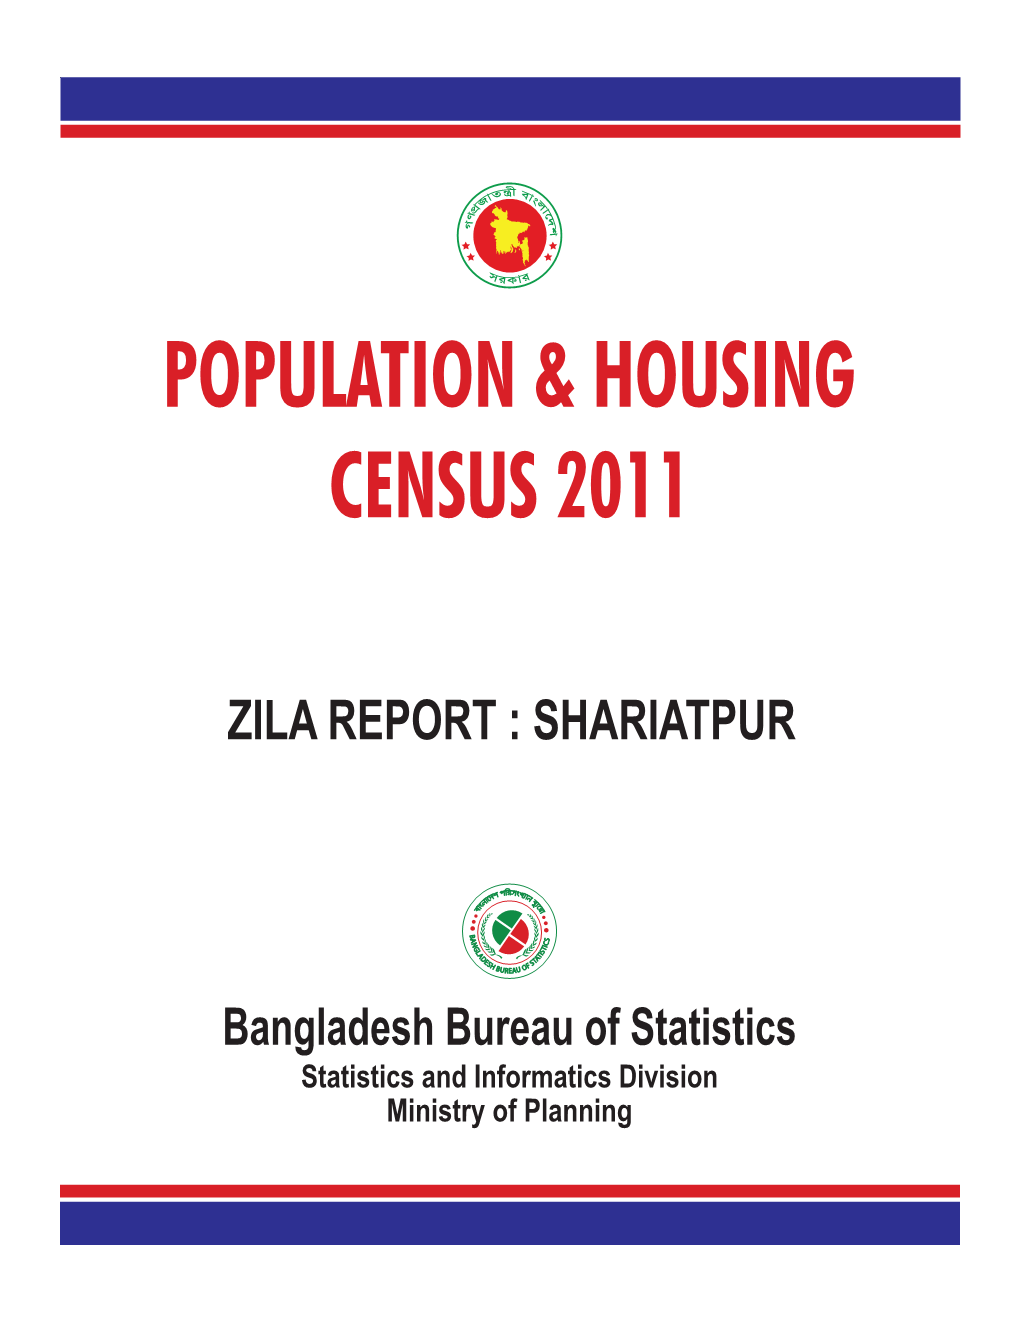 Population & Housing Census 2011